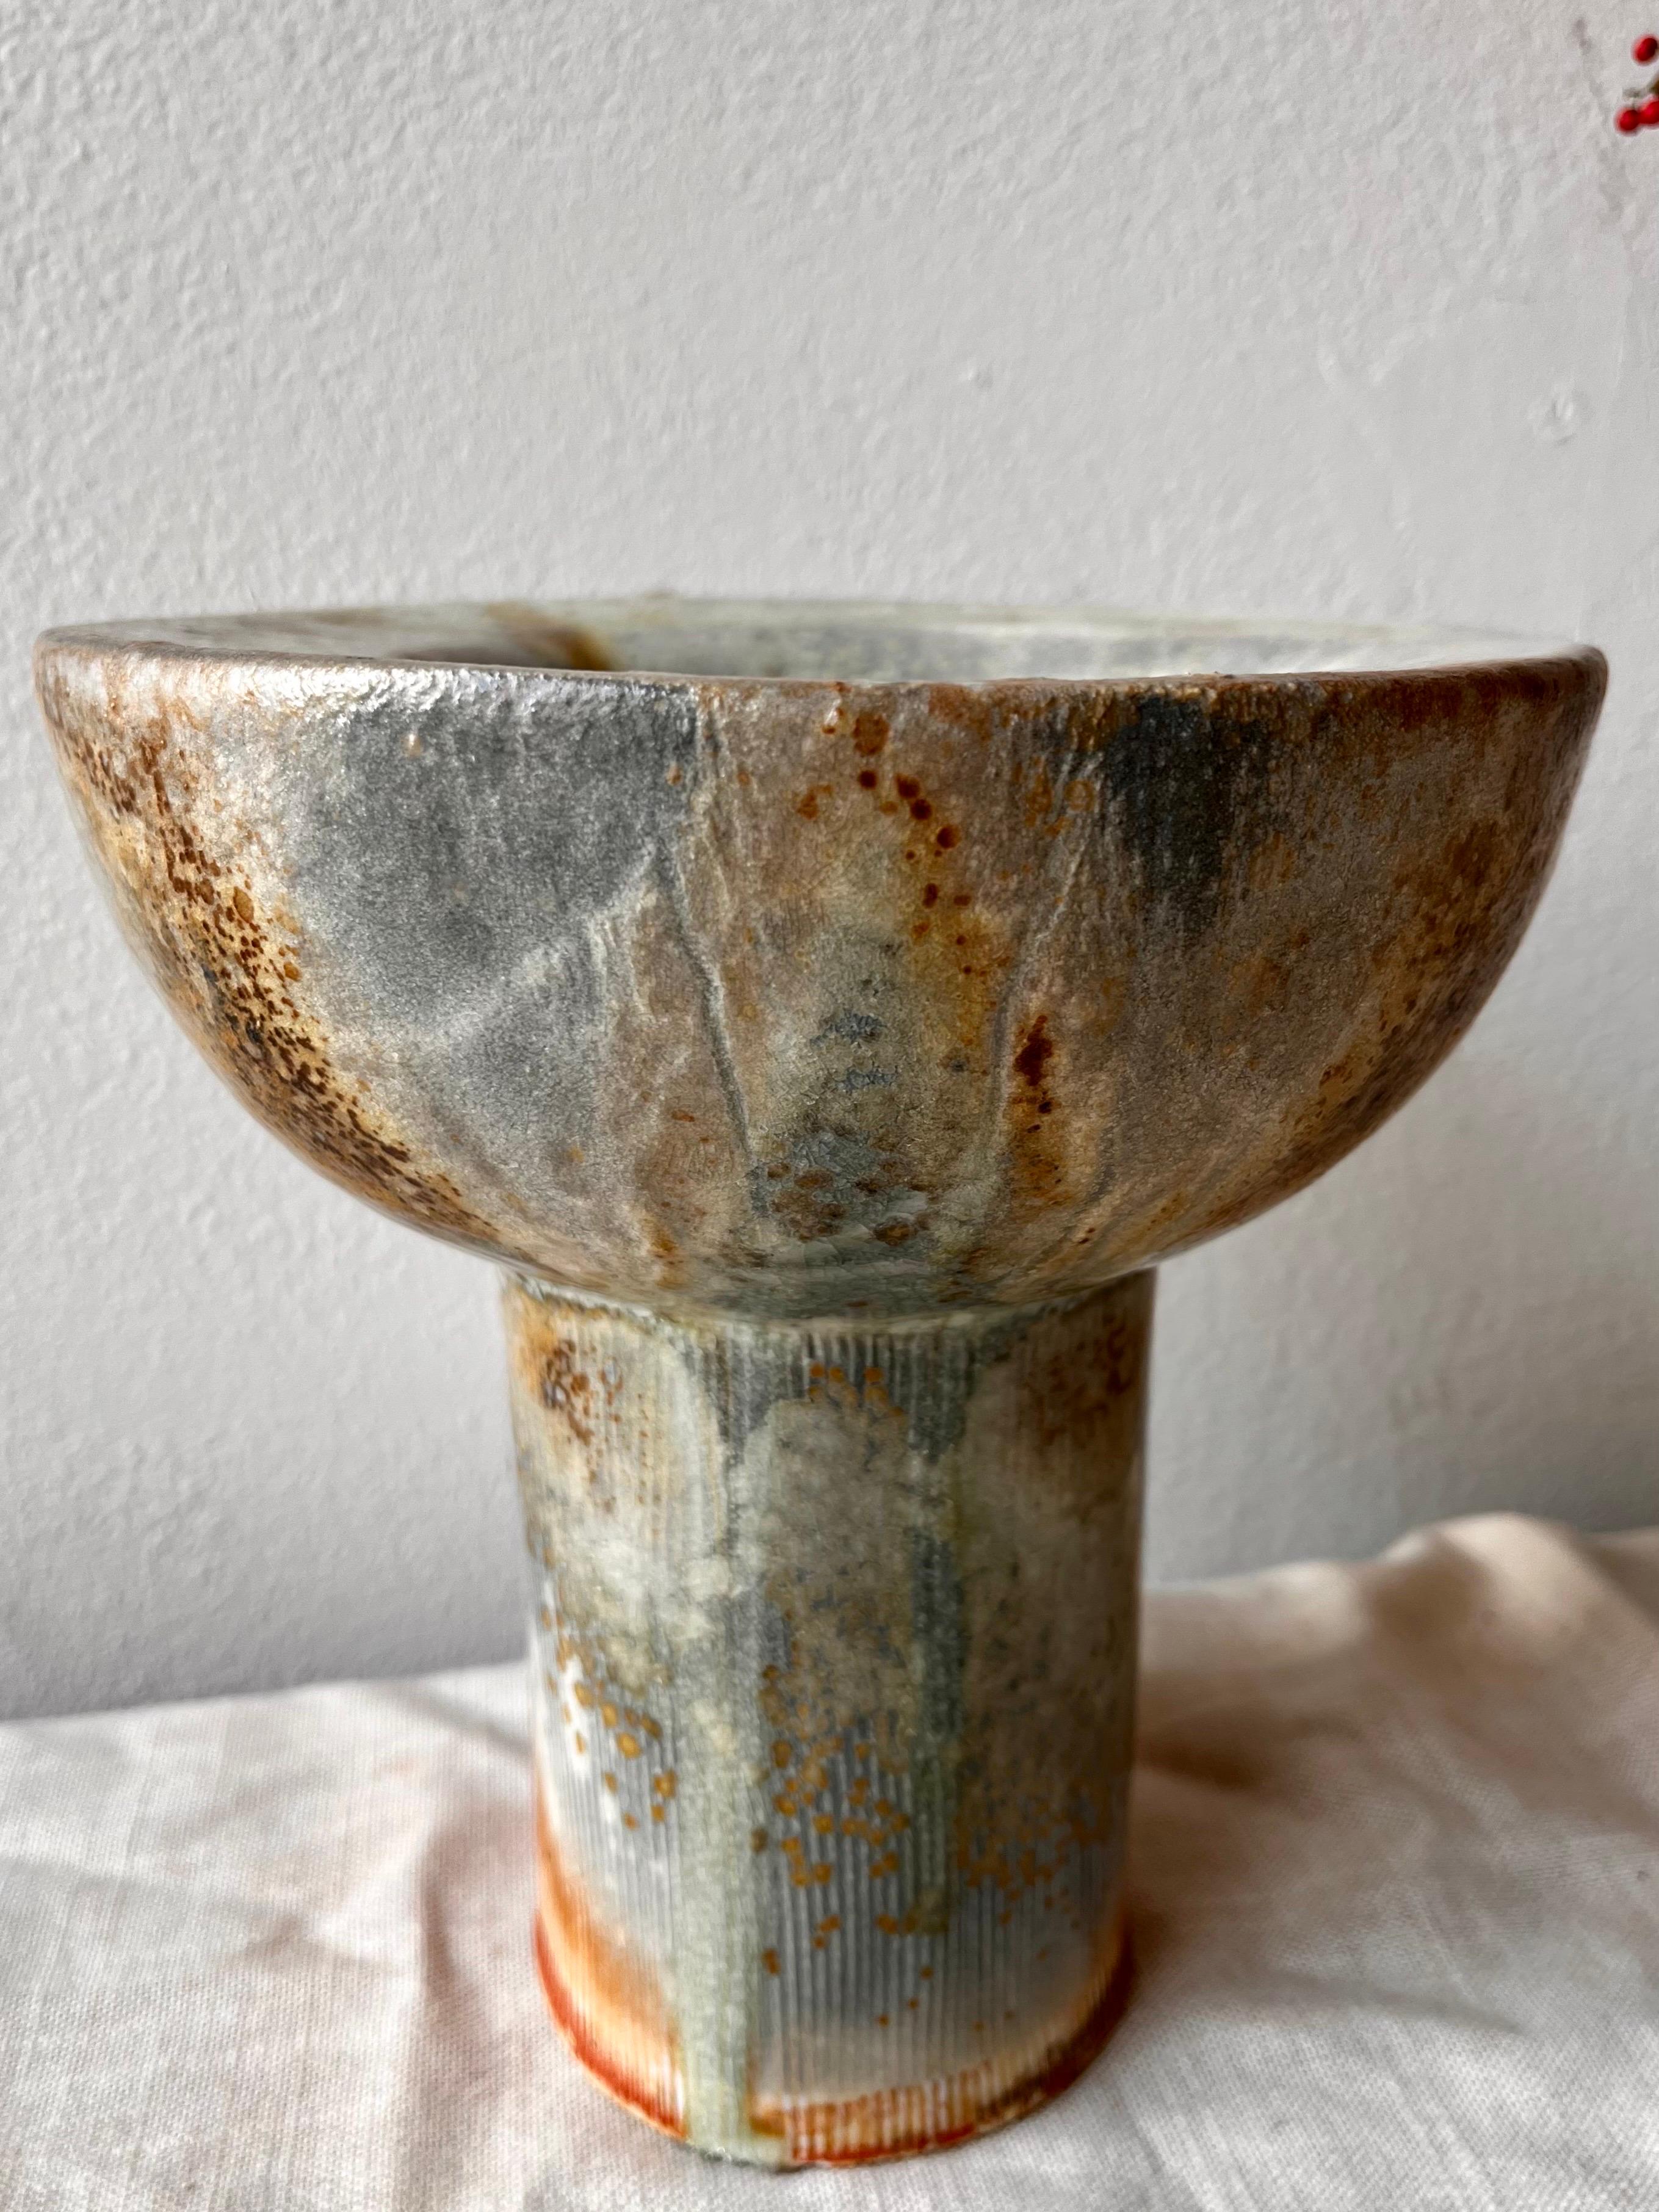 Wood-Fired Porcelain Pedestal Bowl 22K Gold Kintsugi Repair Hand-Built Ceramic  For Sale 1